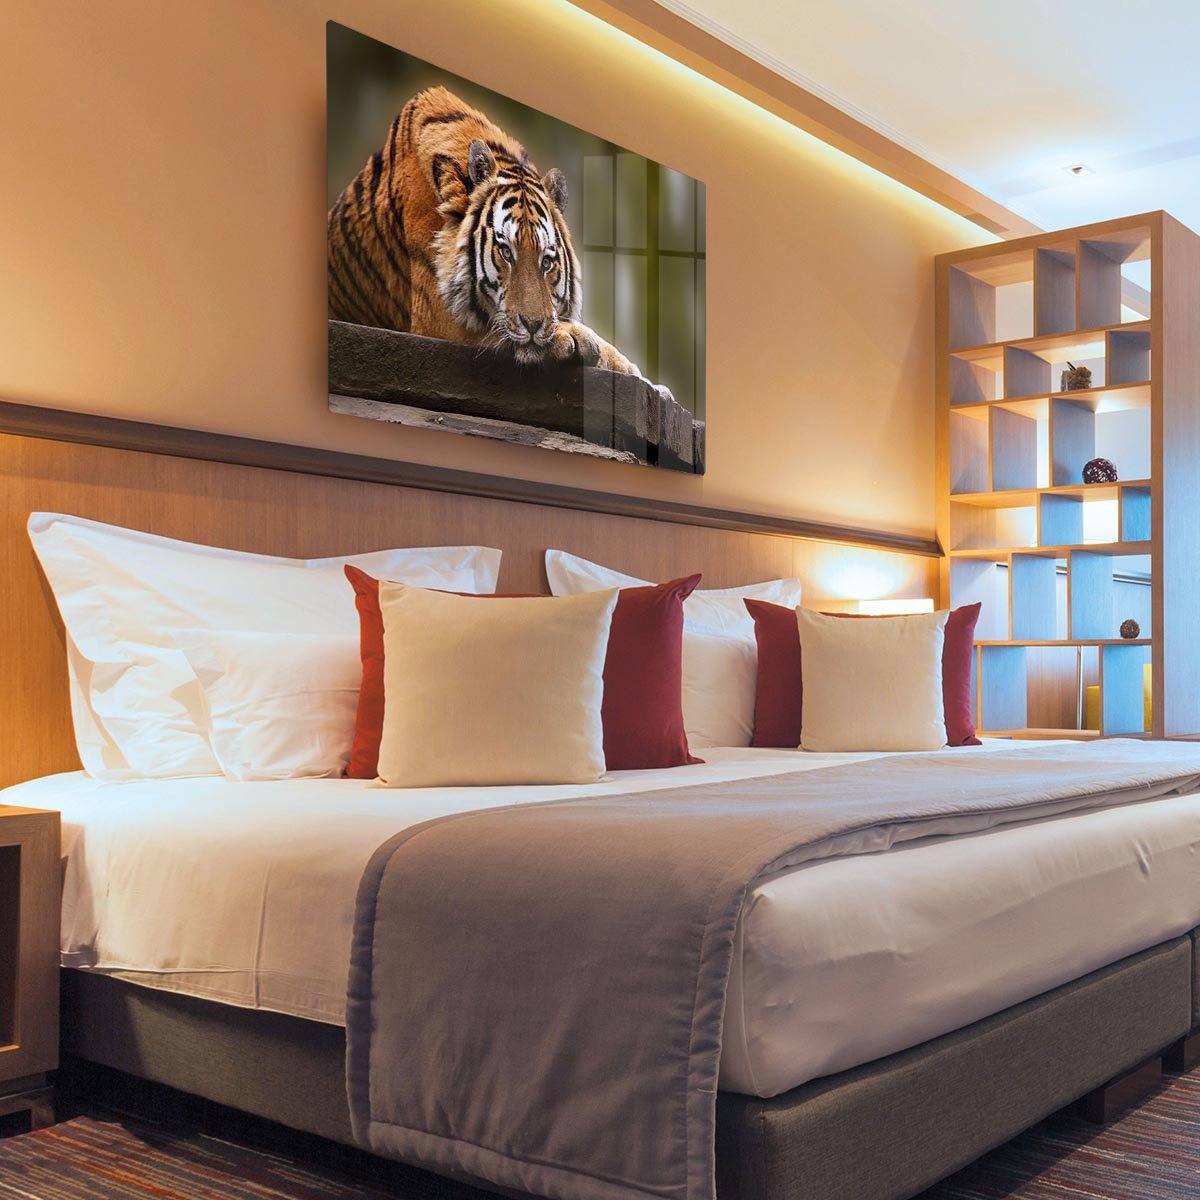 Stunning tiger relaxing HD Metal Print - Canvas Art Rocks - 3